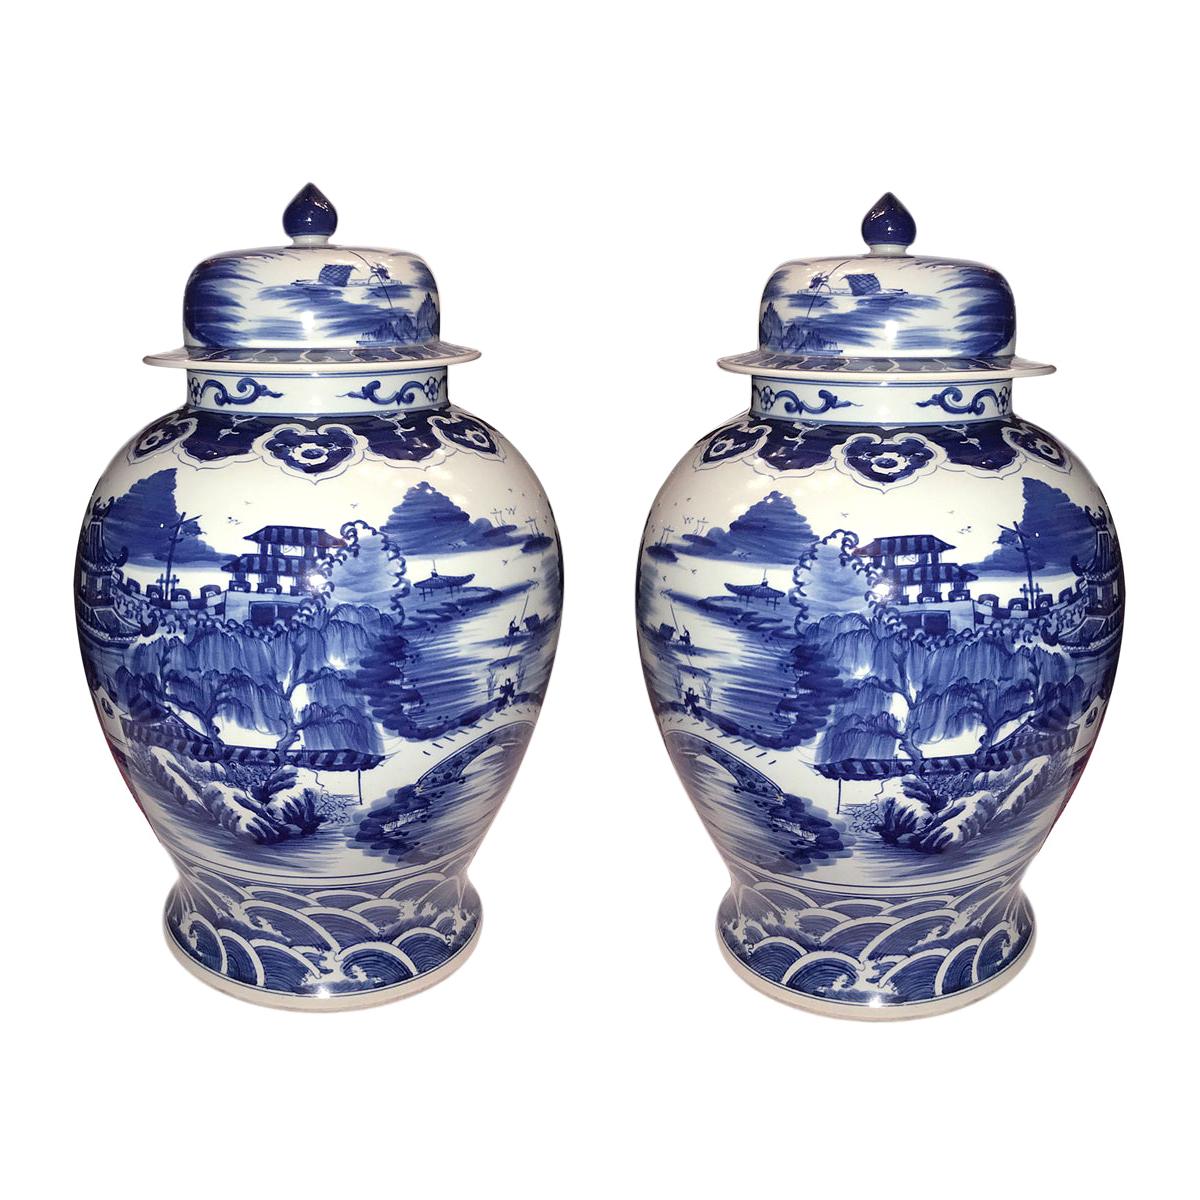 Pair of Large Chinese Jars